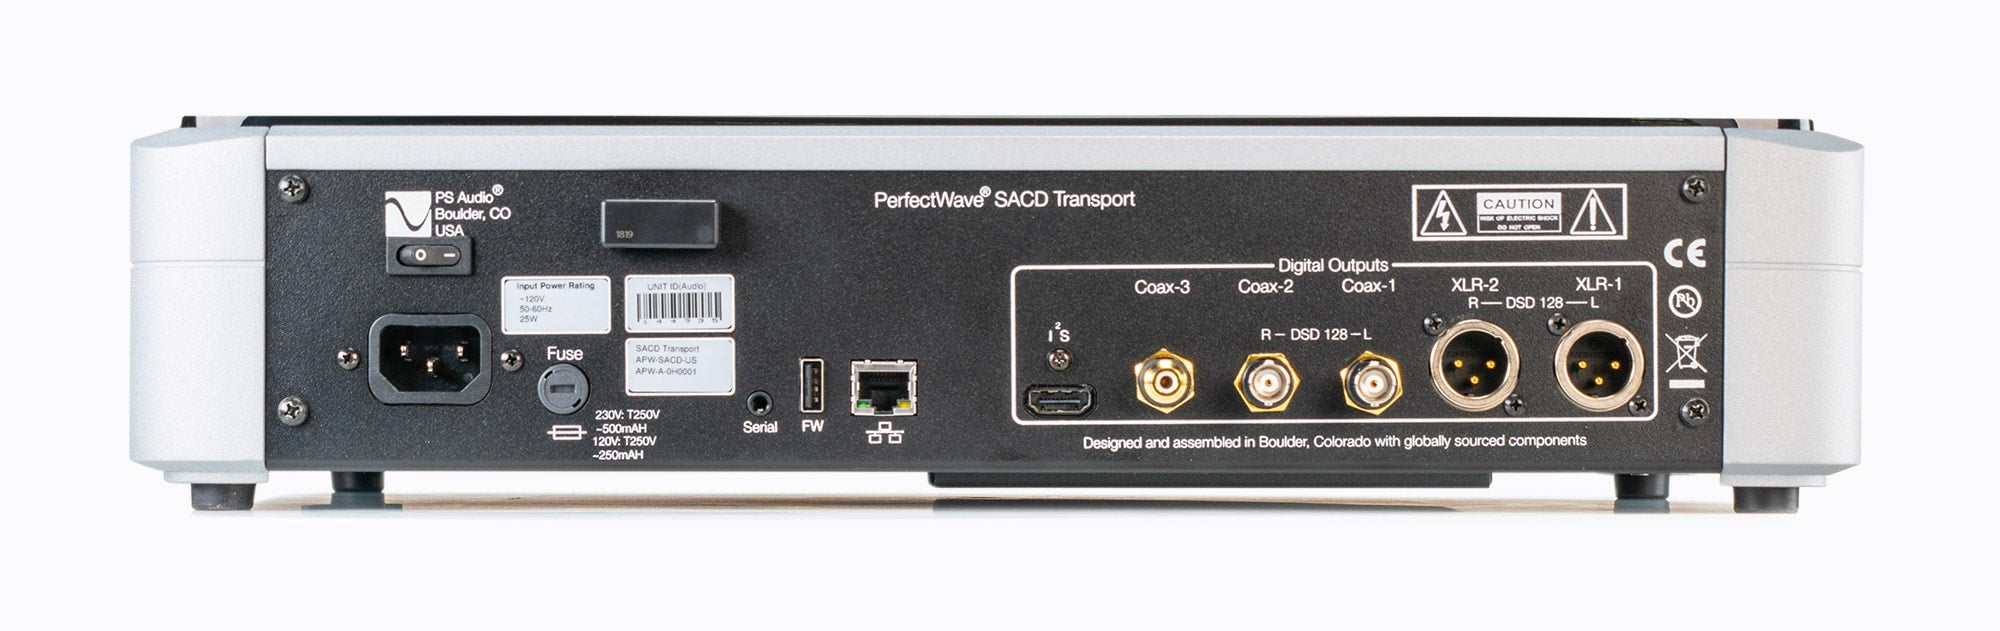 PS Audio PerfectWave SACD transport Silver Rear Connections - Douglas HiFi Perth